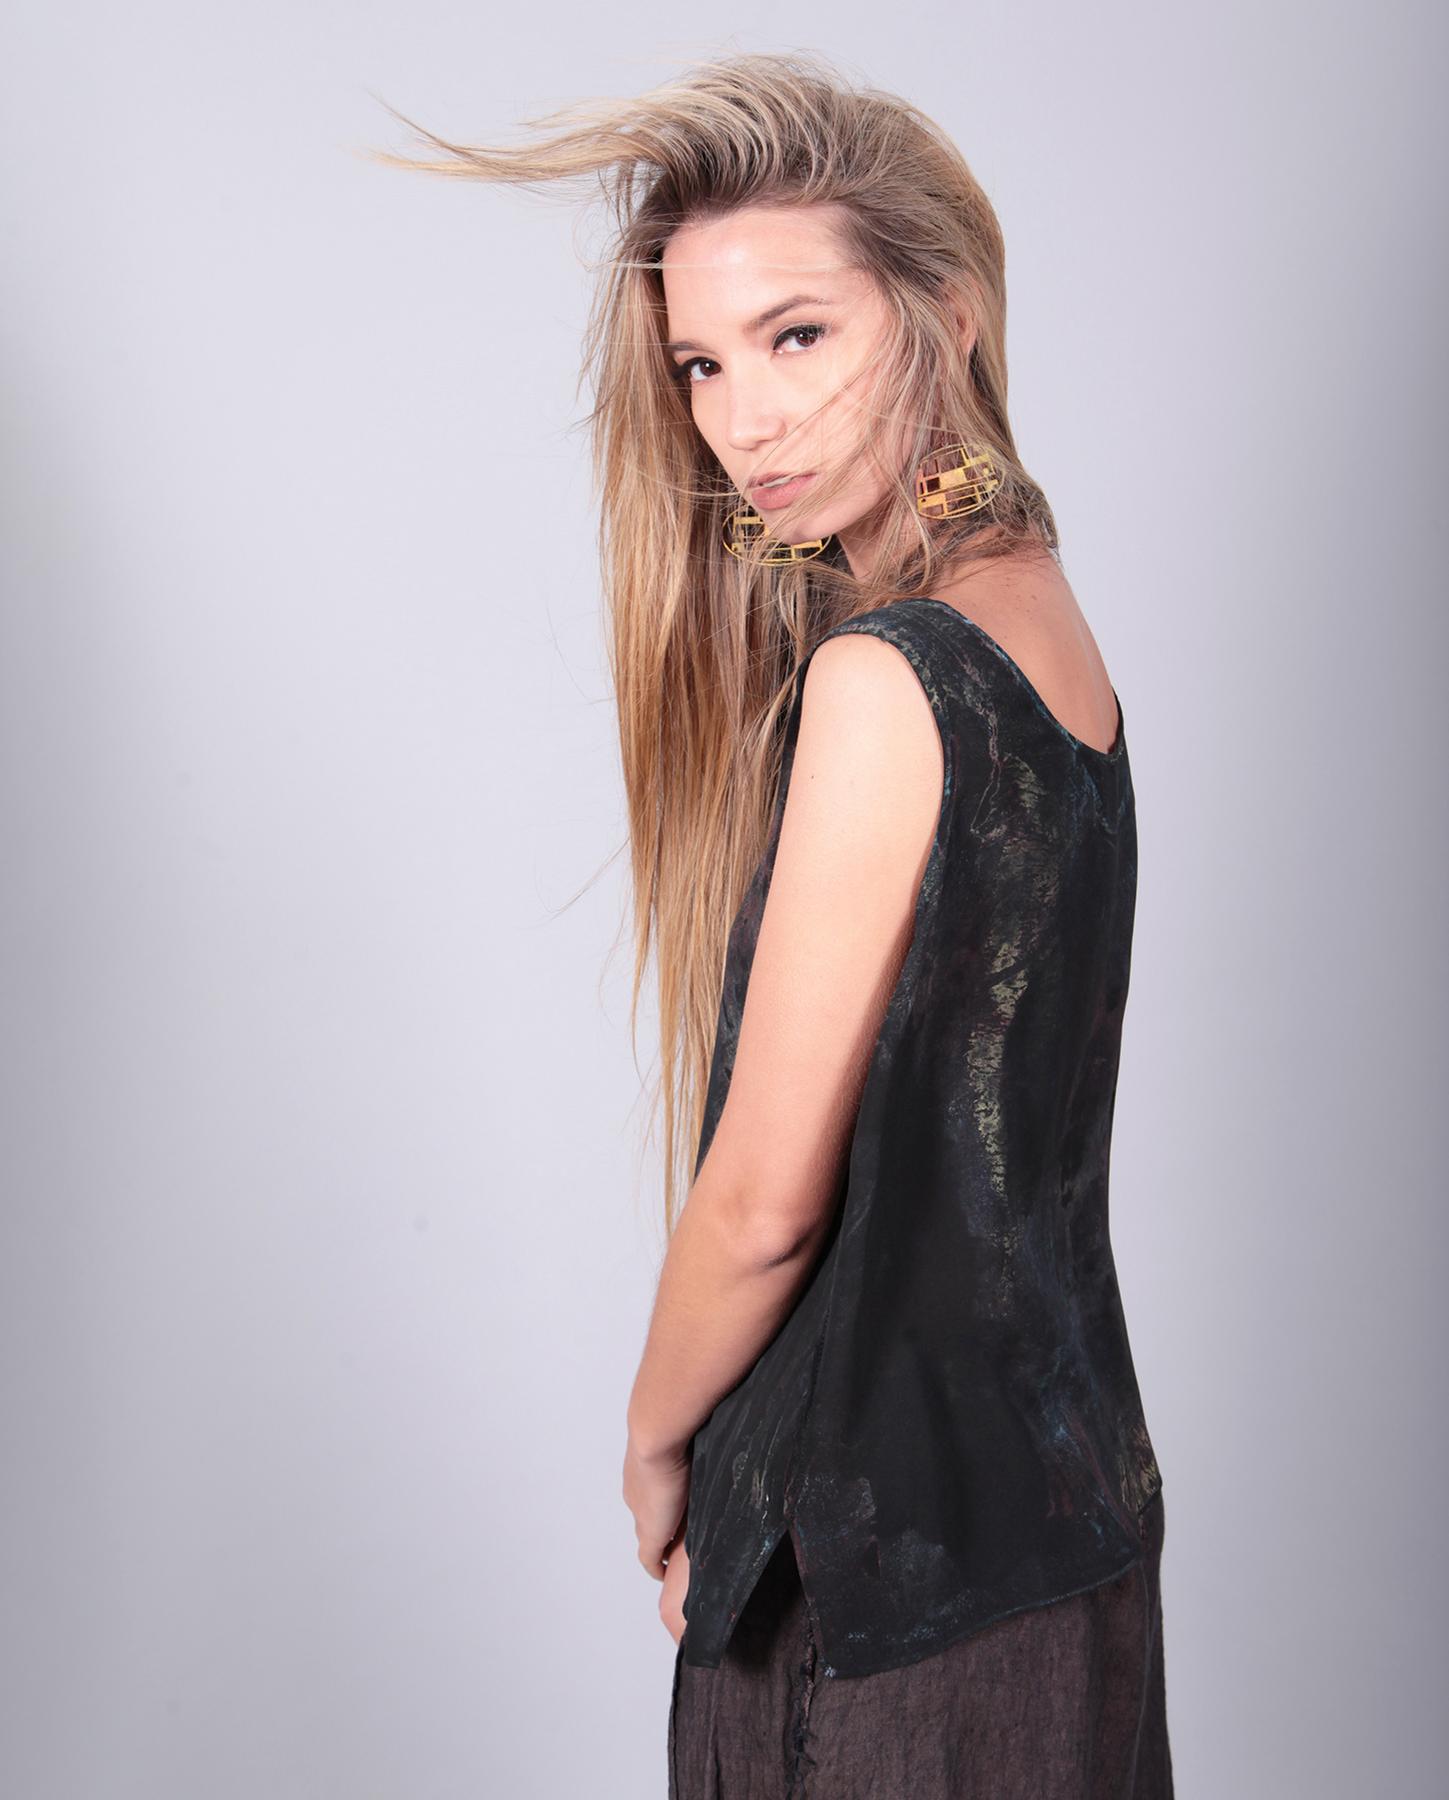 Art-to-Wear by Tatiana Palnitska - subtle color over black silk tank top